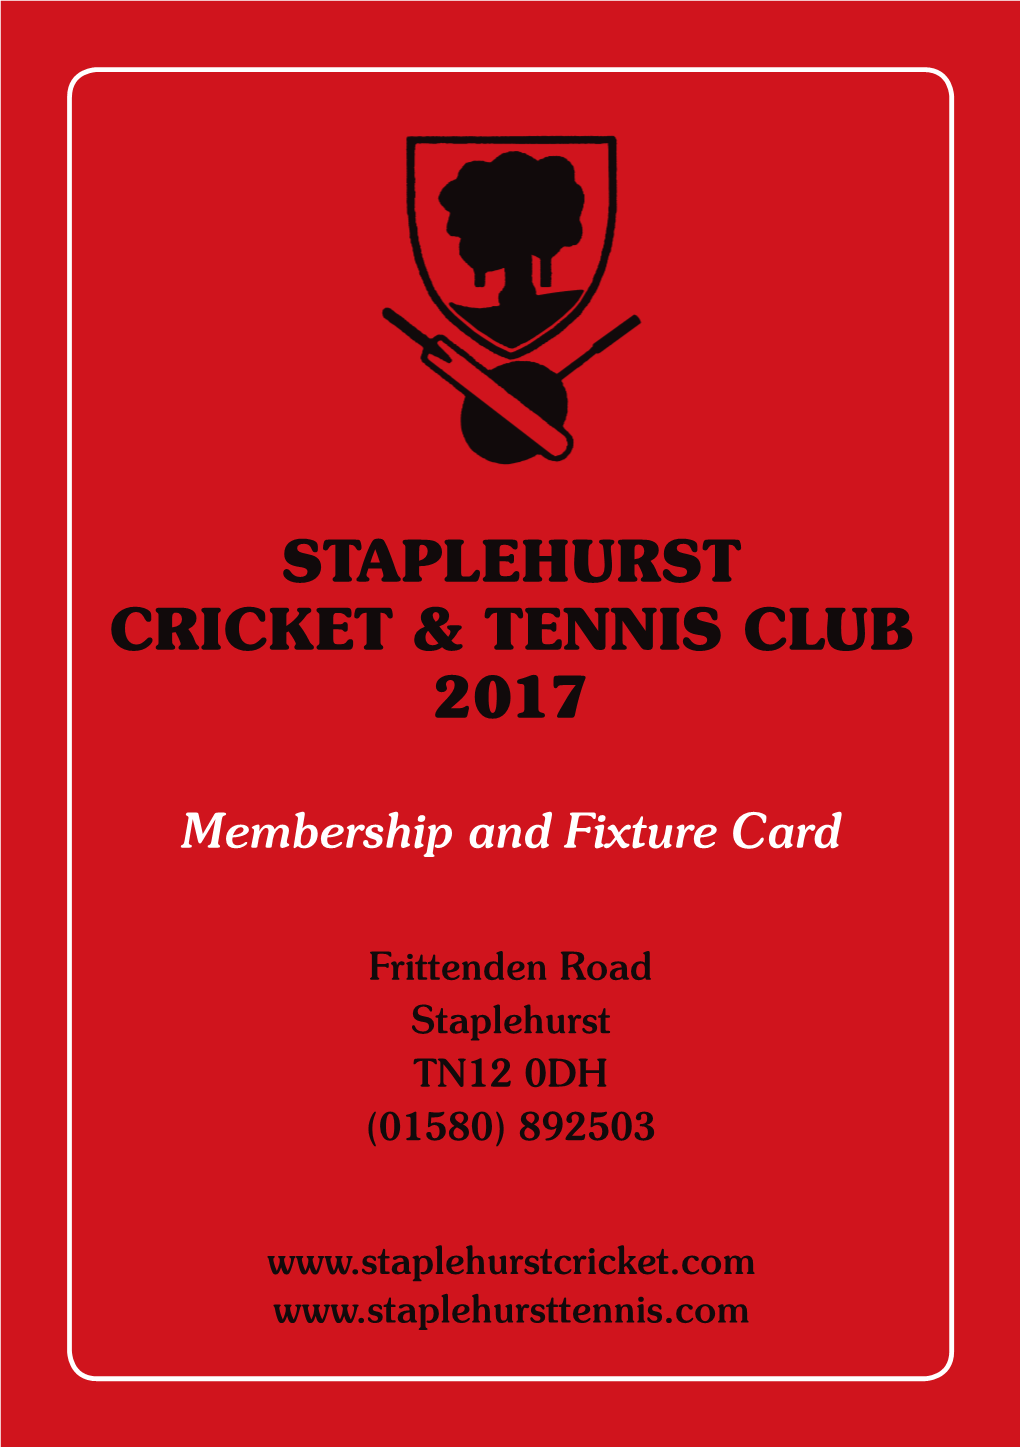 Staplehurst Cricket & Tennis Club 2017